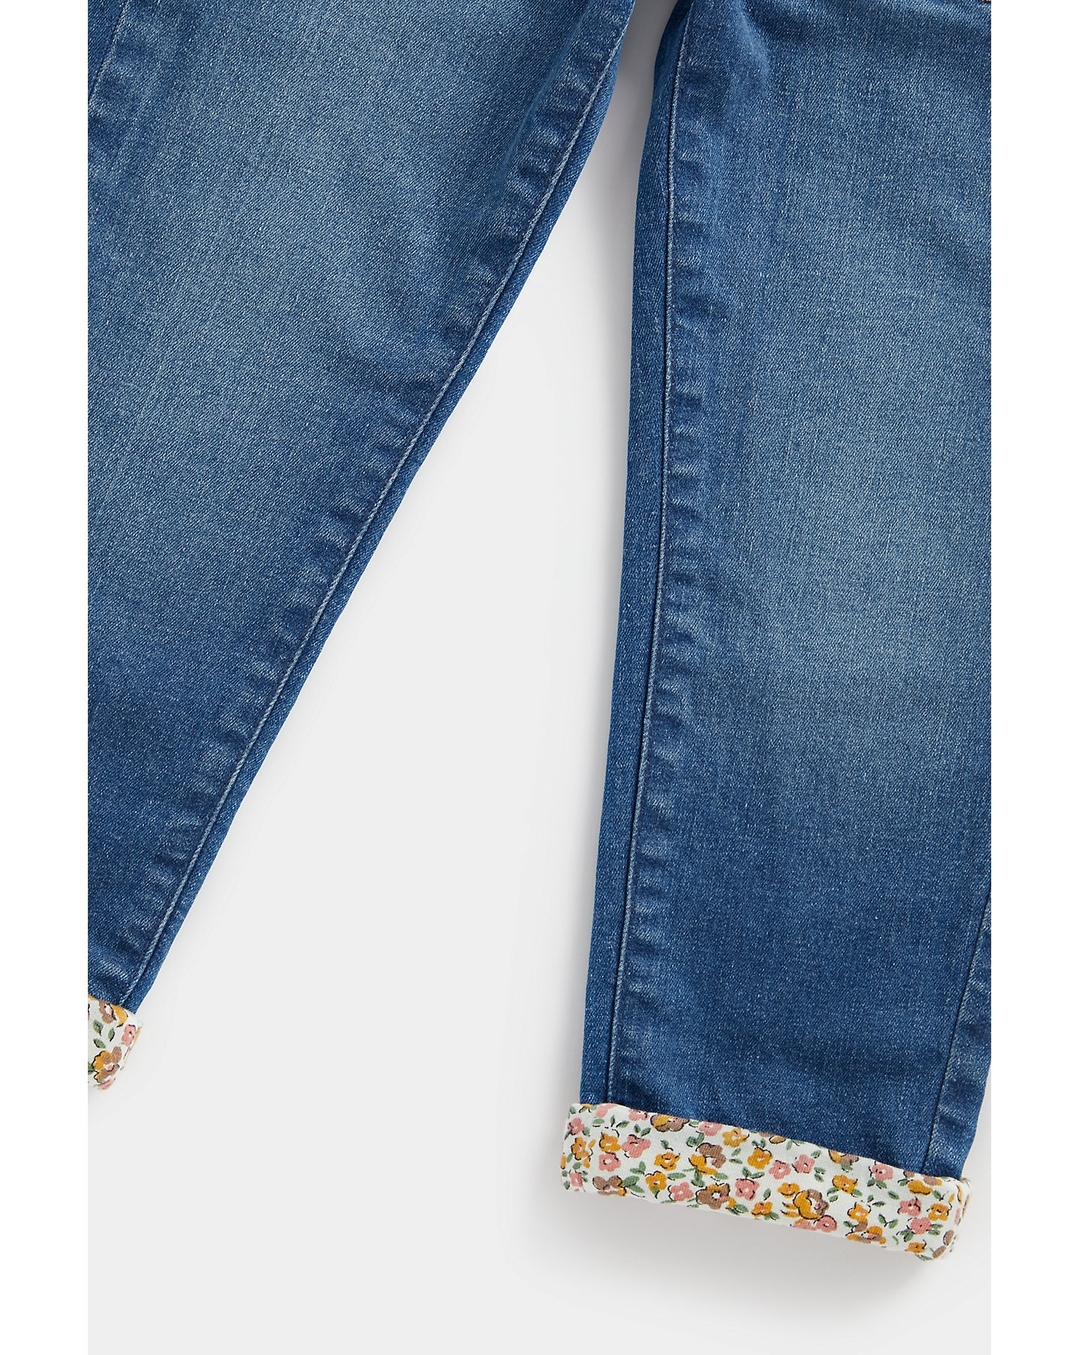 Share 195+ ladies jeans new design latest